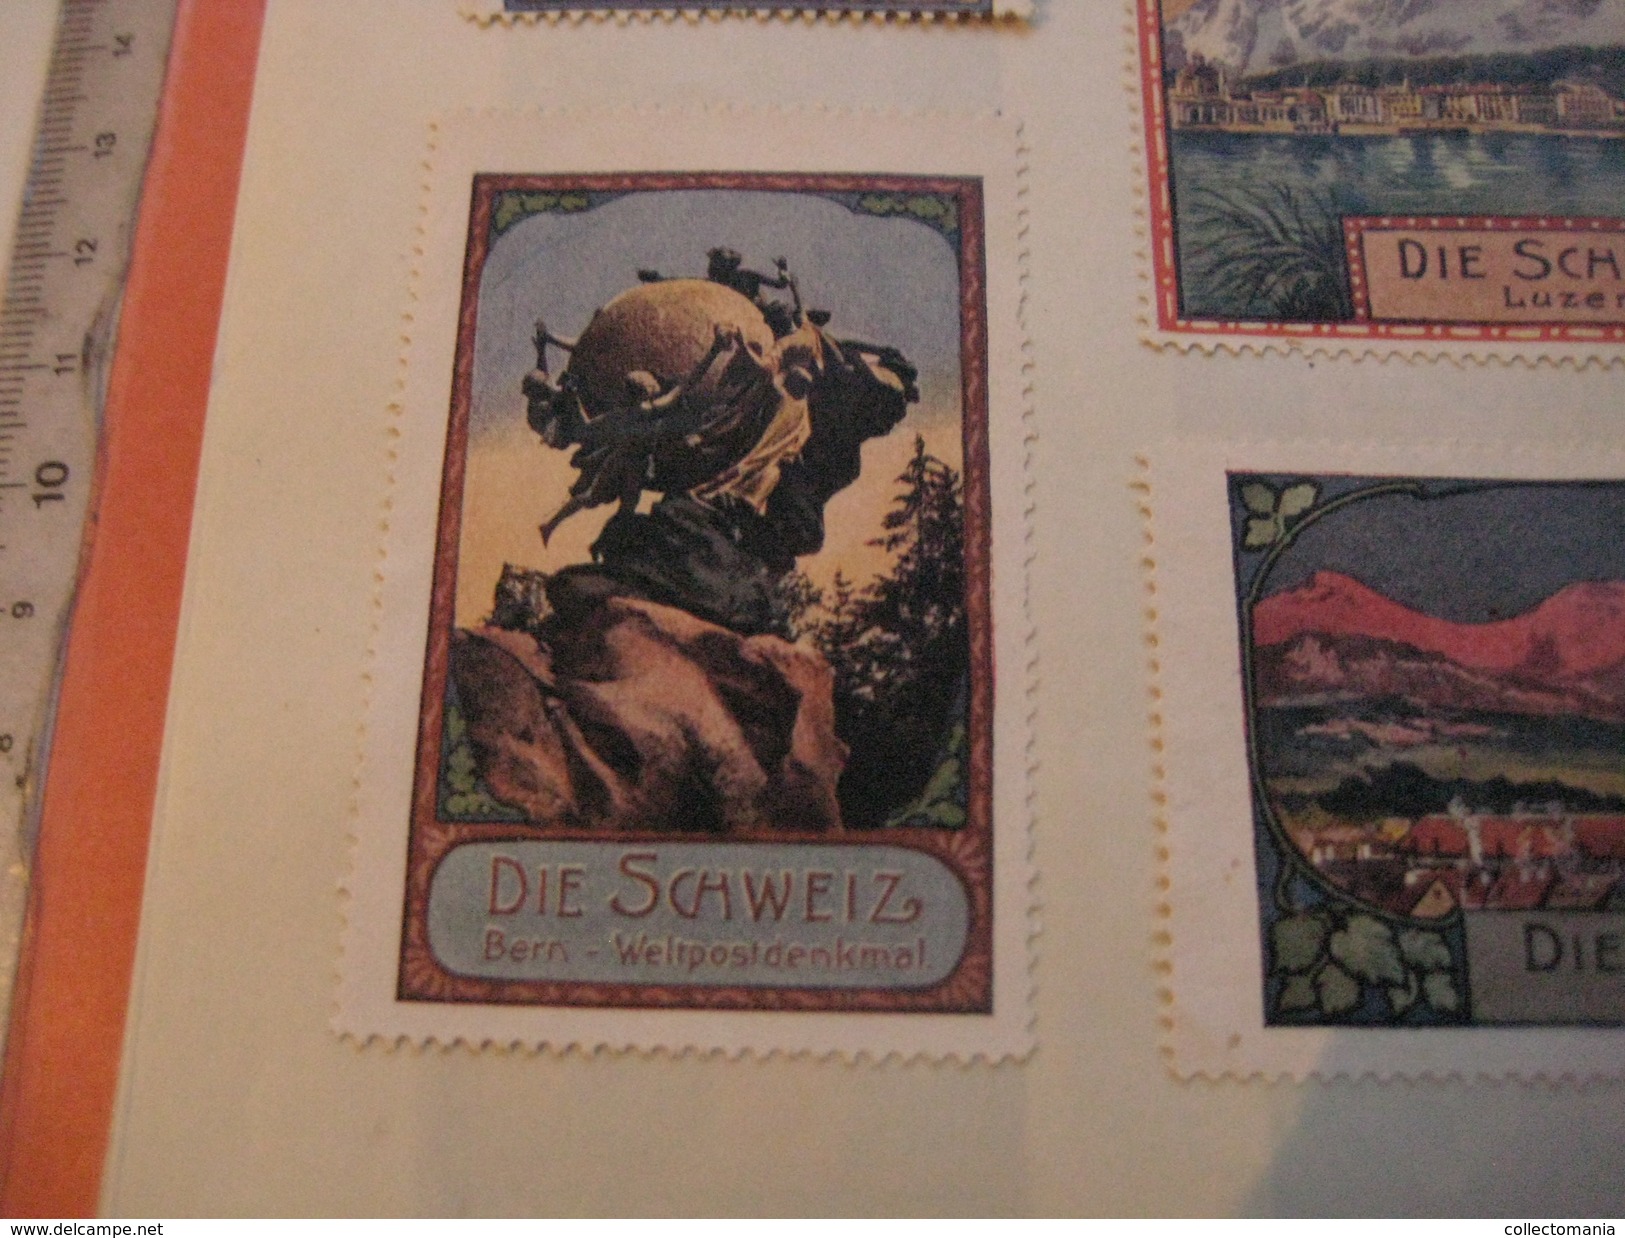 20 poster stamp advertising litho SCHWEIZ Suisse Switserland Weltpostdenkmal Very Good condition